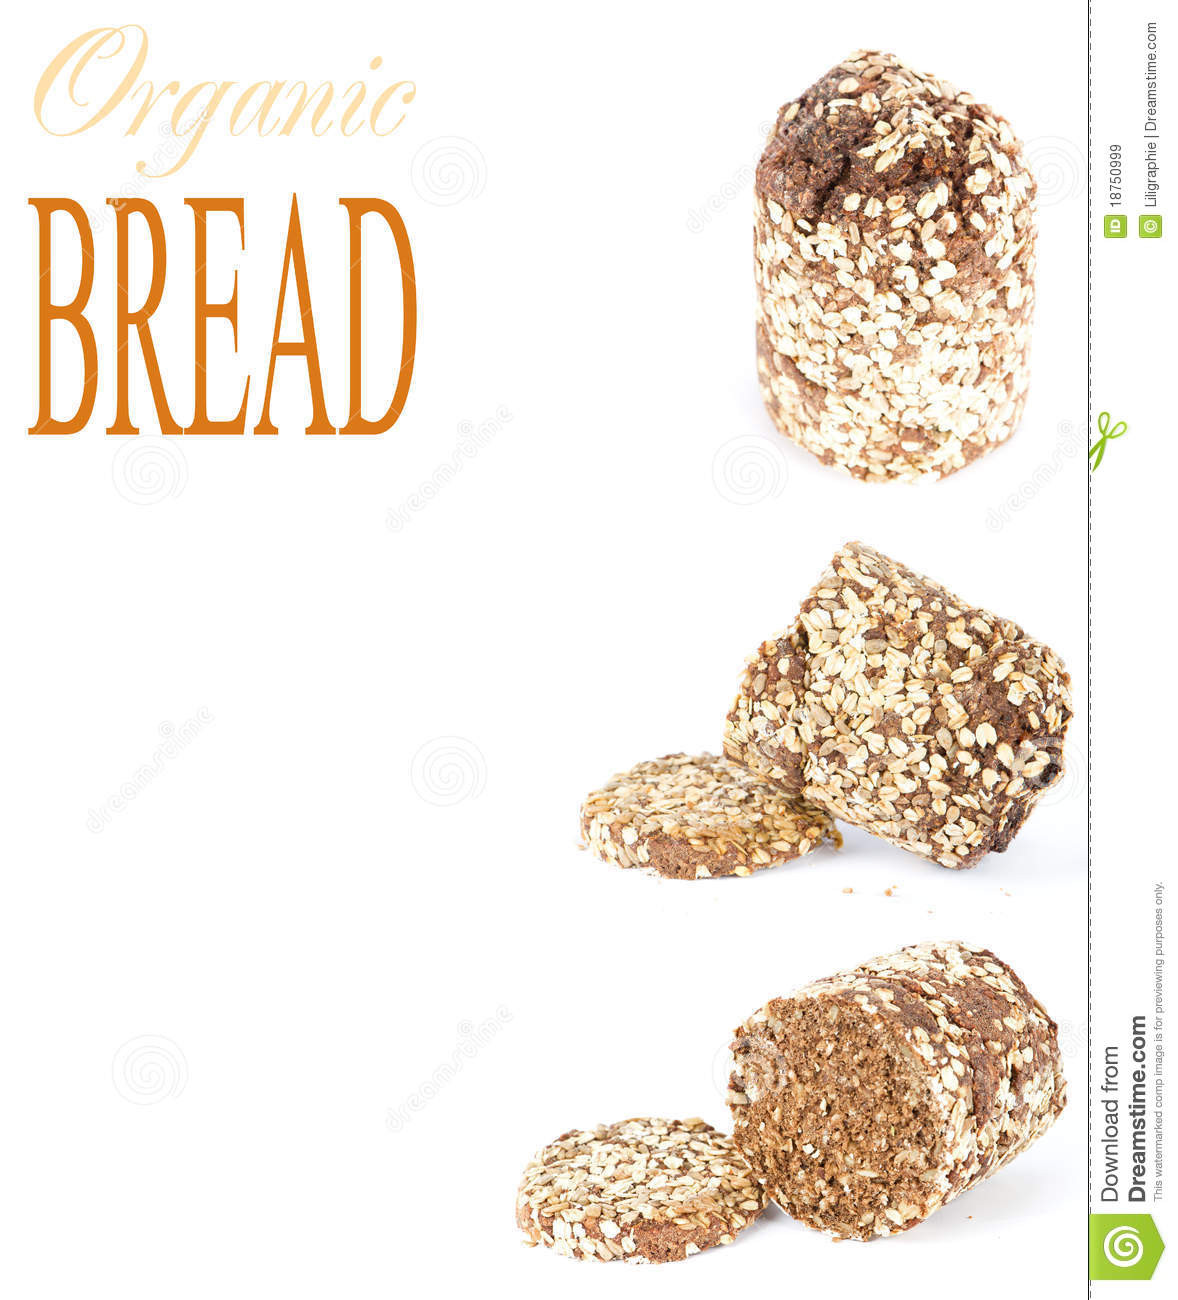 Organic Whole Grain Bread
 Organic whole grain bread stock image Image of grain